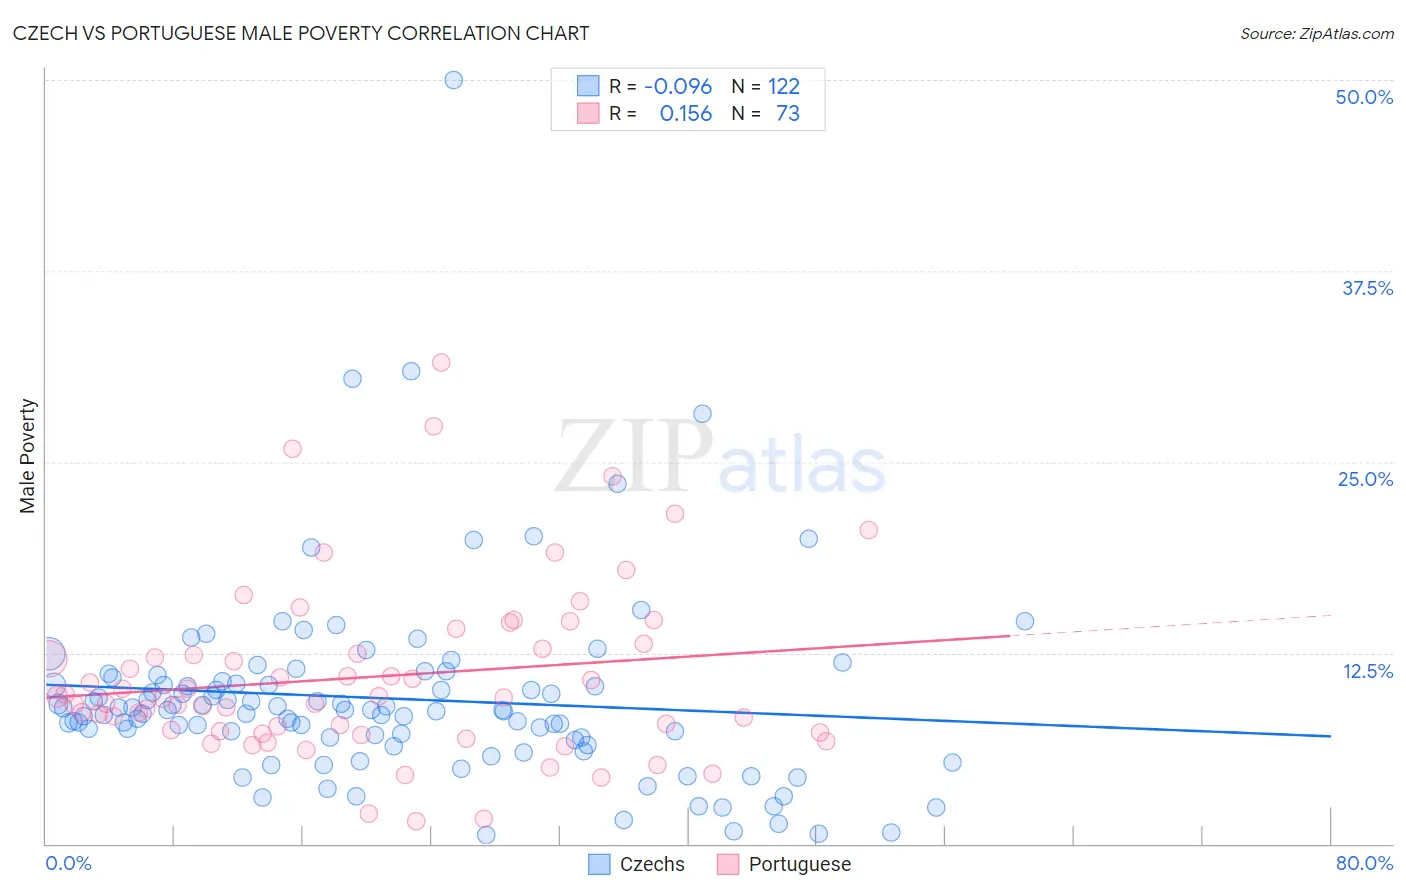 Czech vs Portuguese Male Poverty